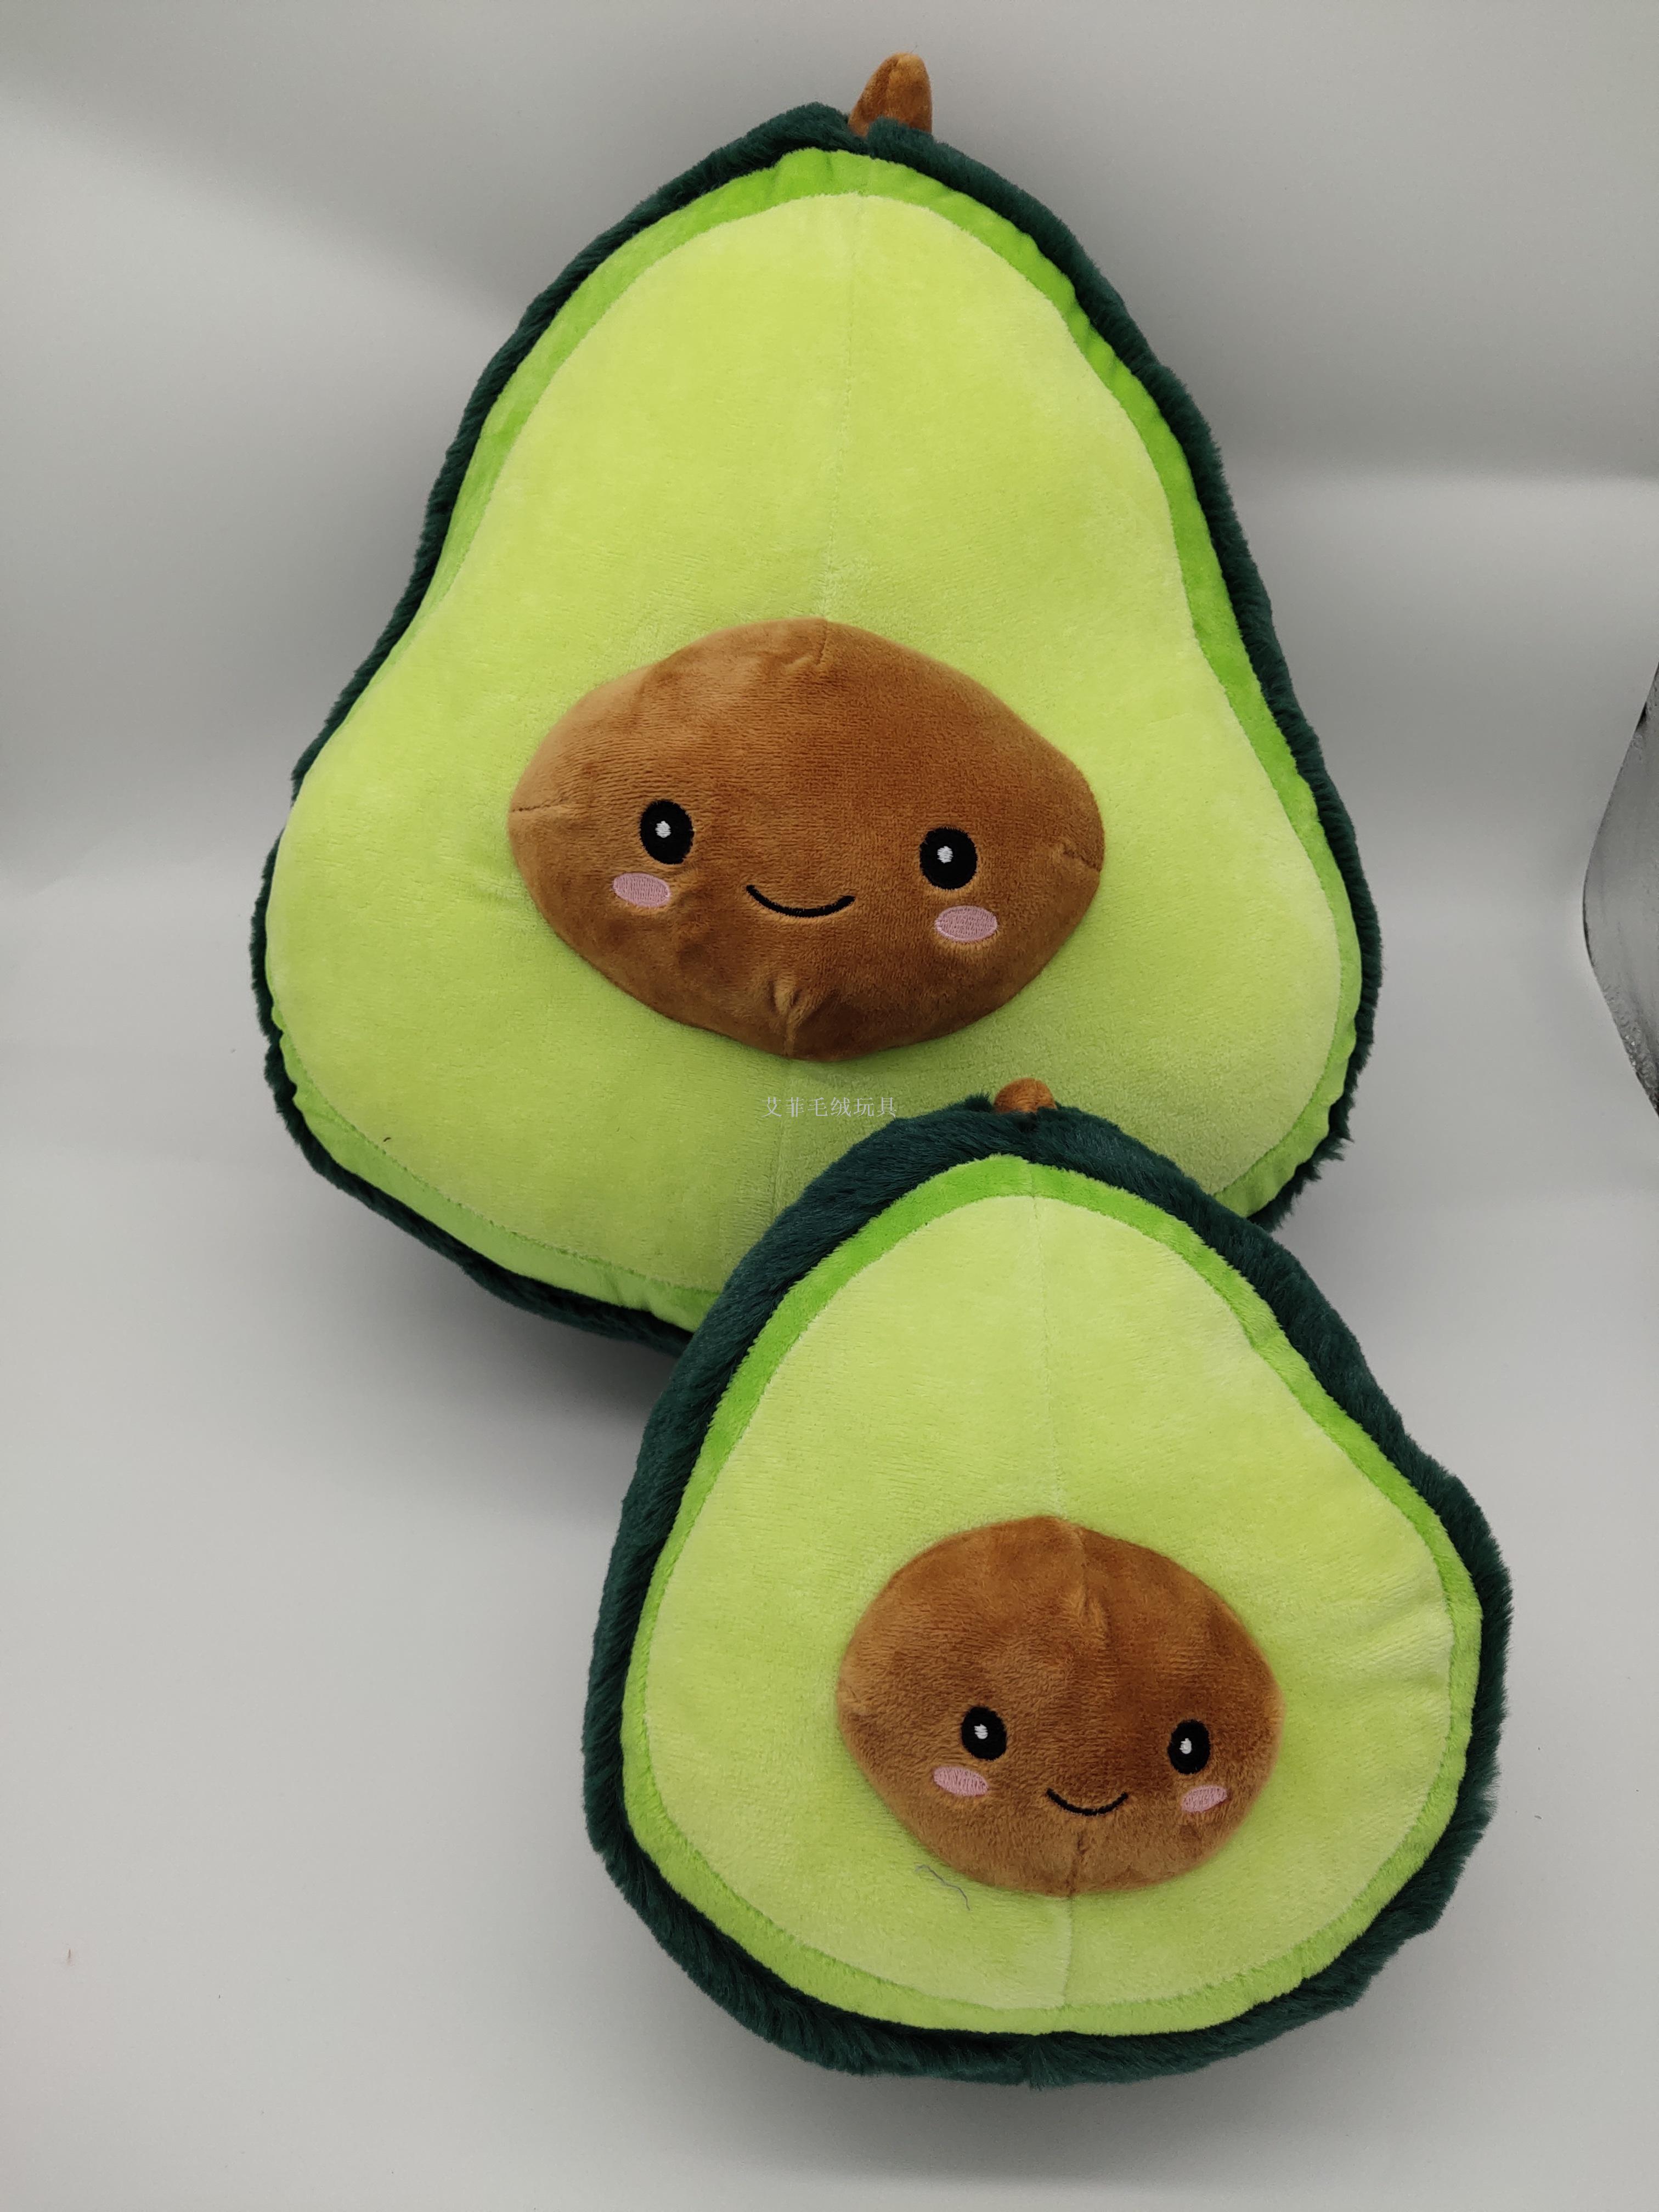 teddy avocado